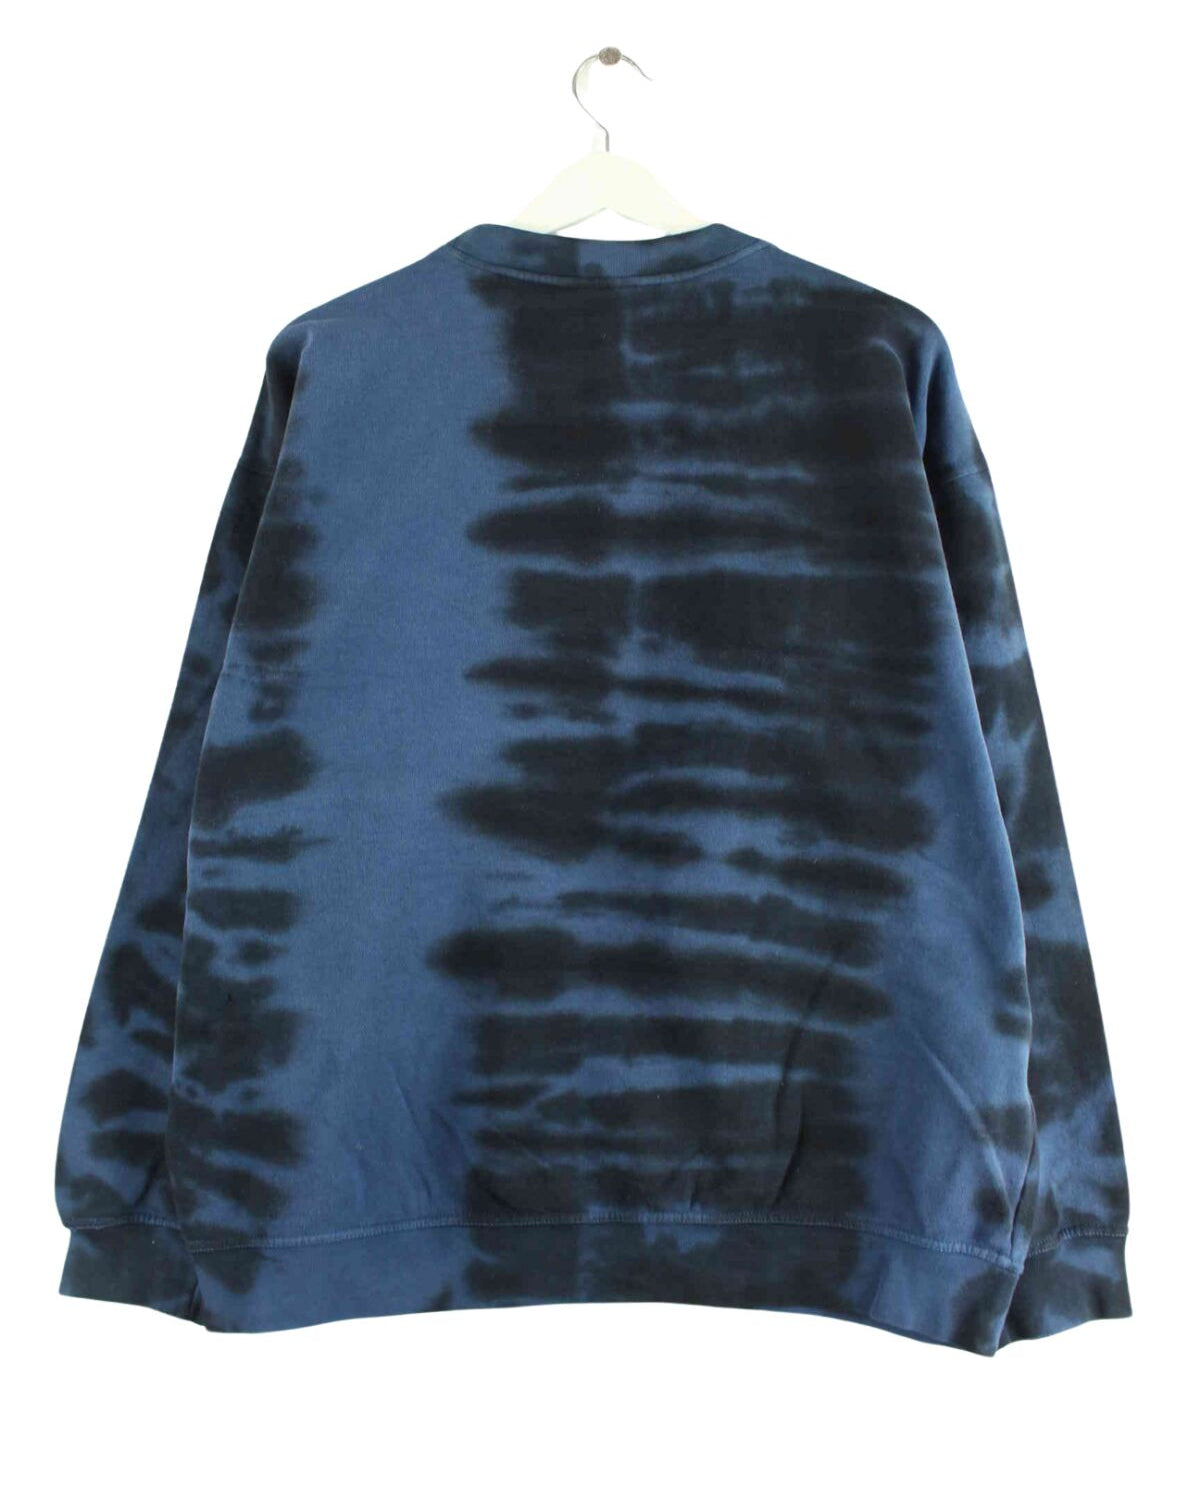 Adidas 90s Vintage Tie Dye Sweater Blau M (back image)